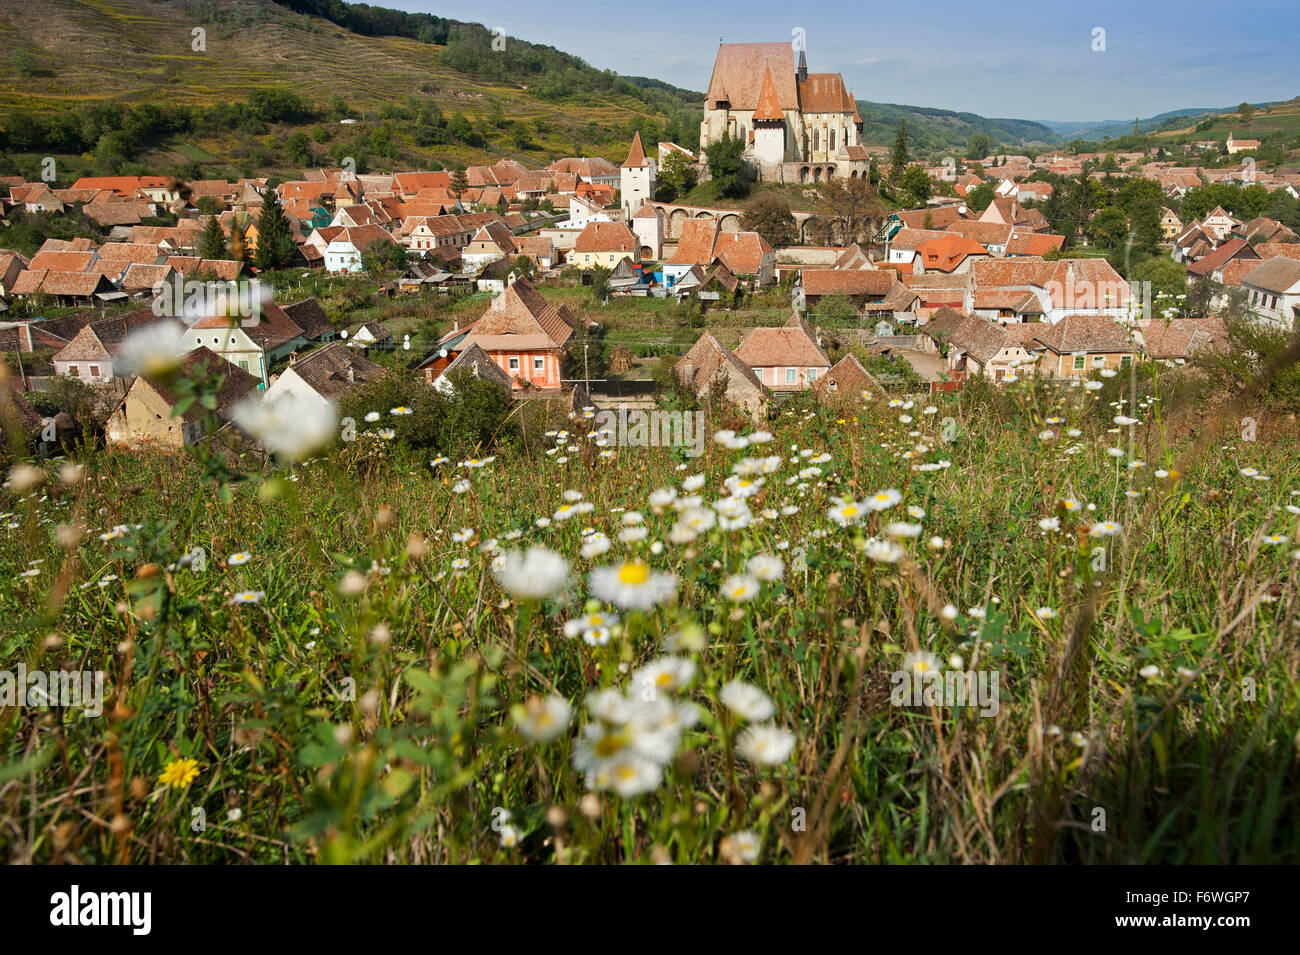 Vistas a la aldea con la iglesia fortificada, Biertan, Transilvania, Rumania Foto de stock